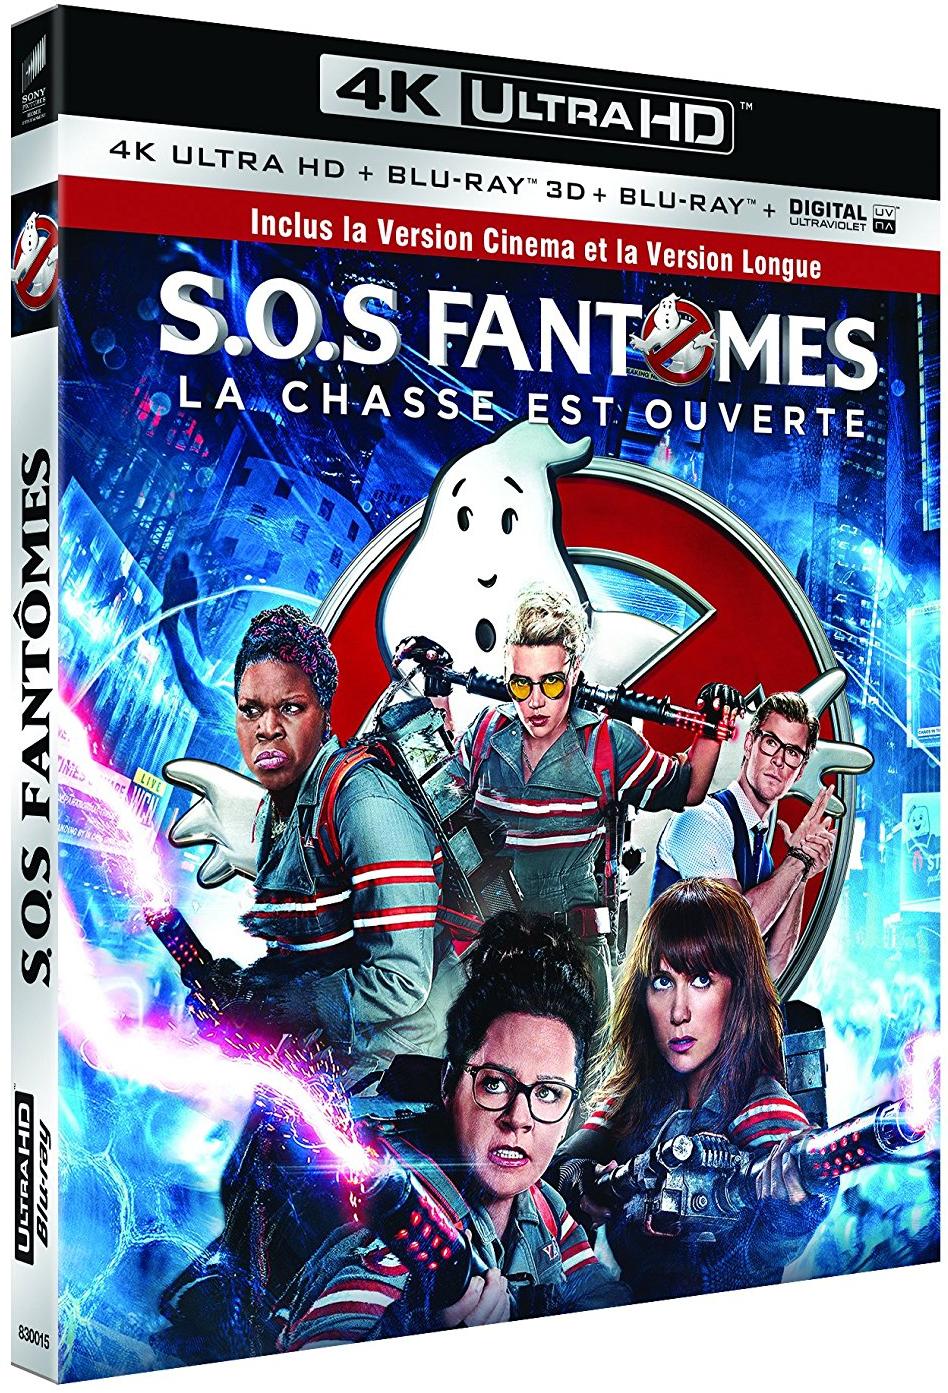 S.O.S Fantômes Blu-Ray 4K